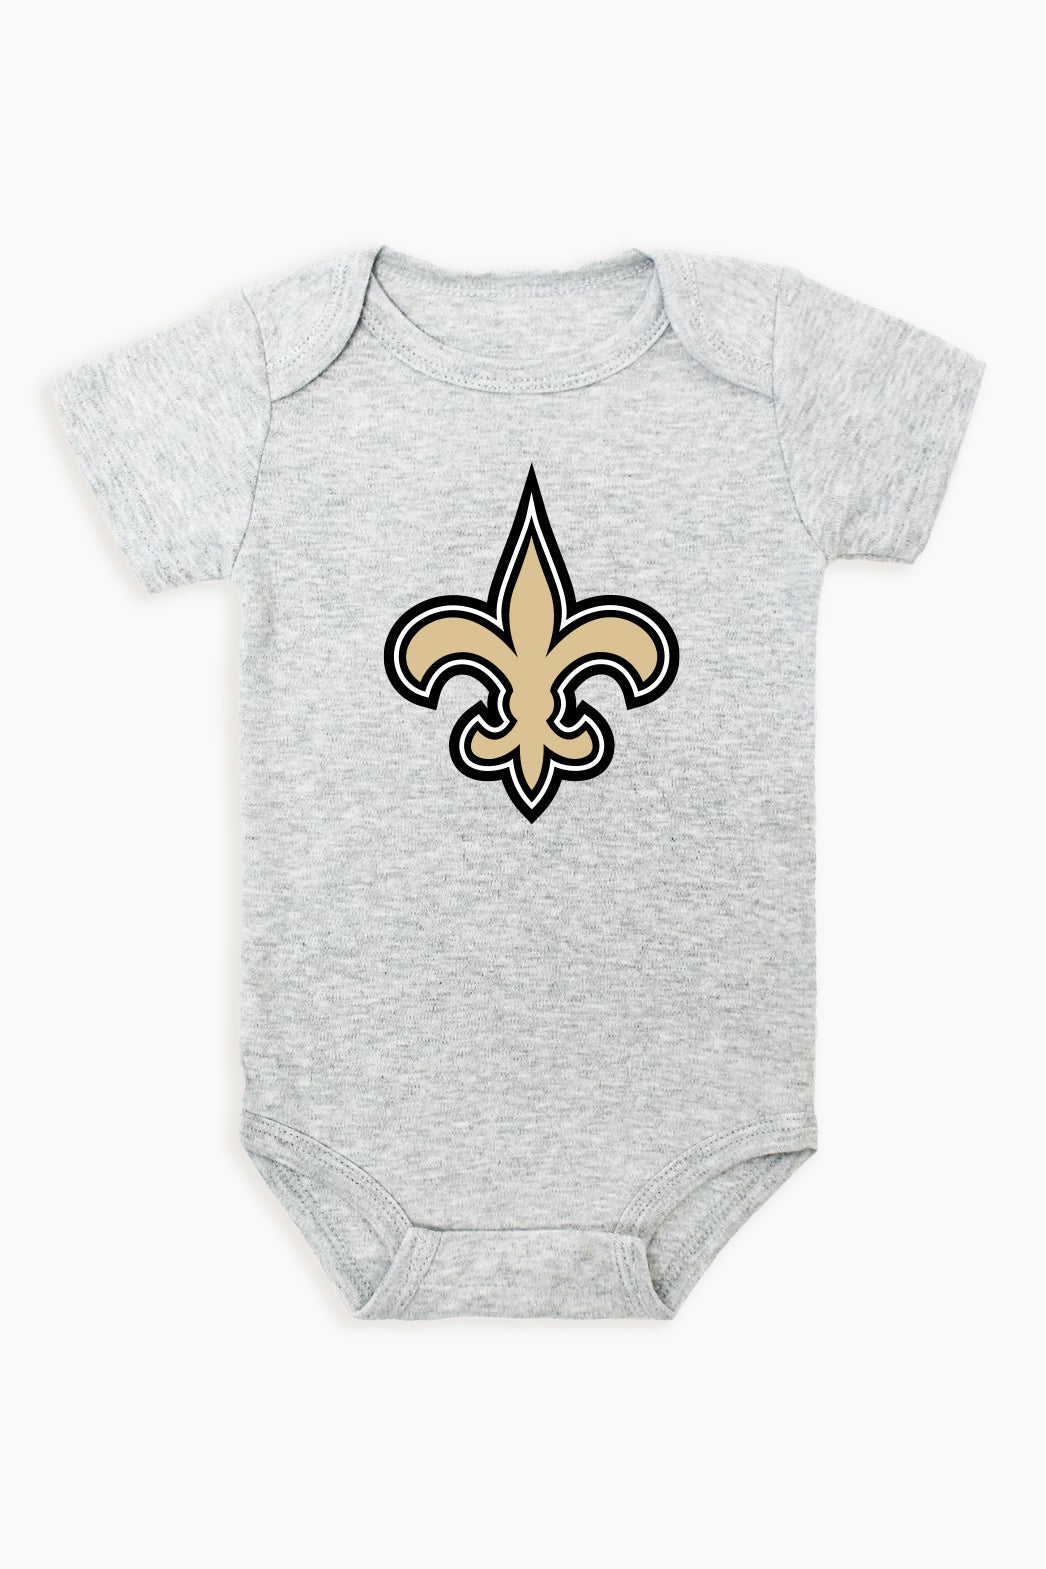 Gertex NFL Grey Baby Short-Sleeve Bodysuit - NFC Division